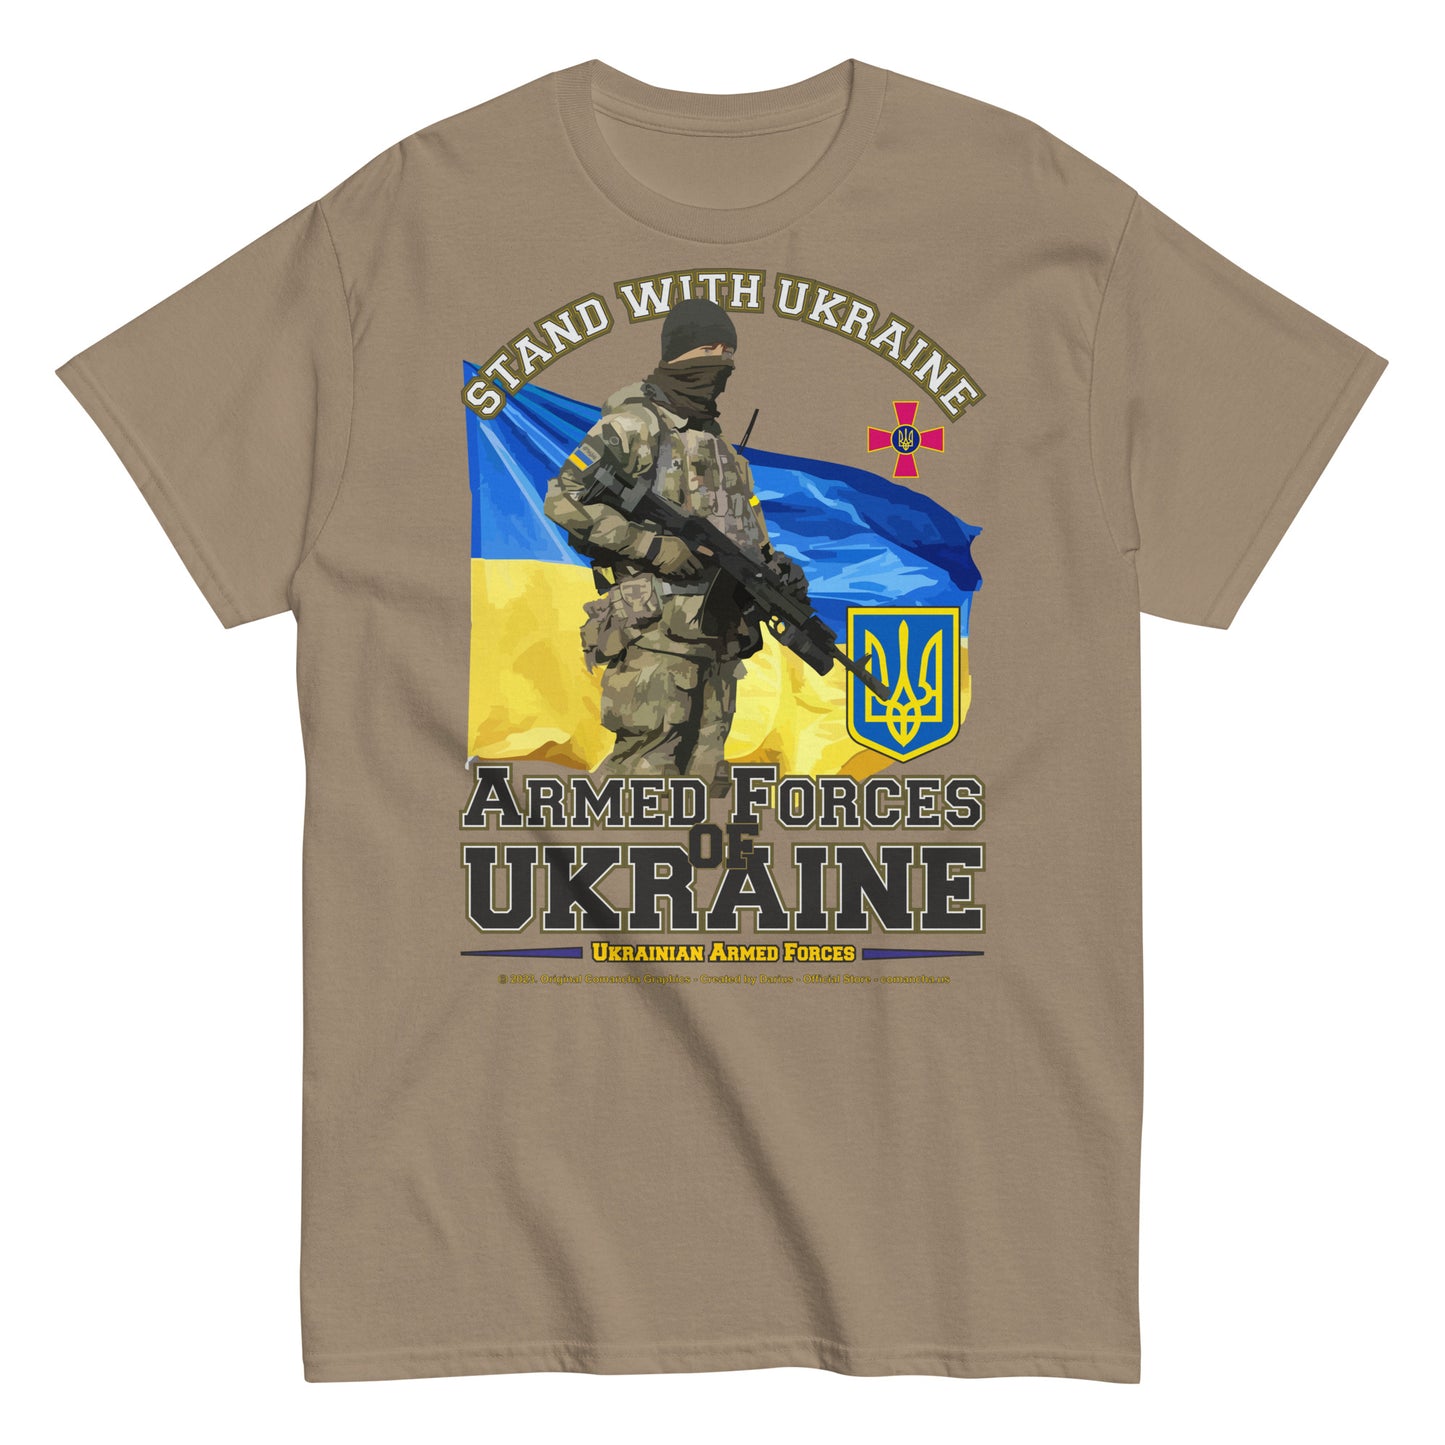 Stand with Ukraine t-shirt